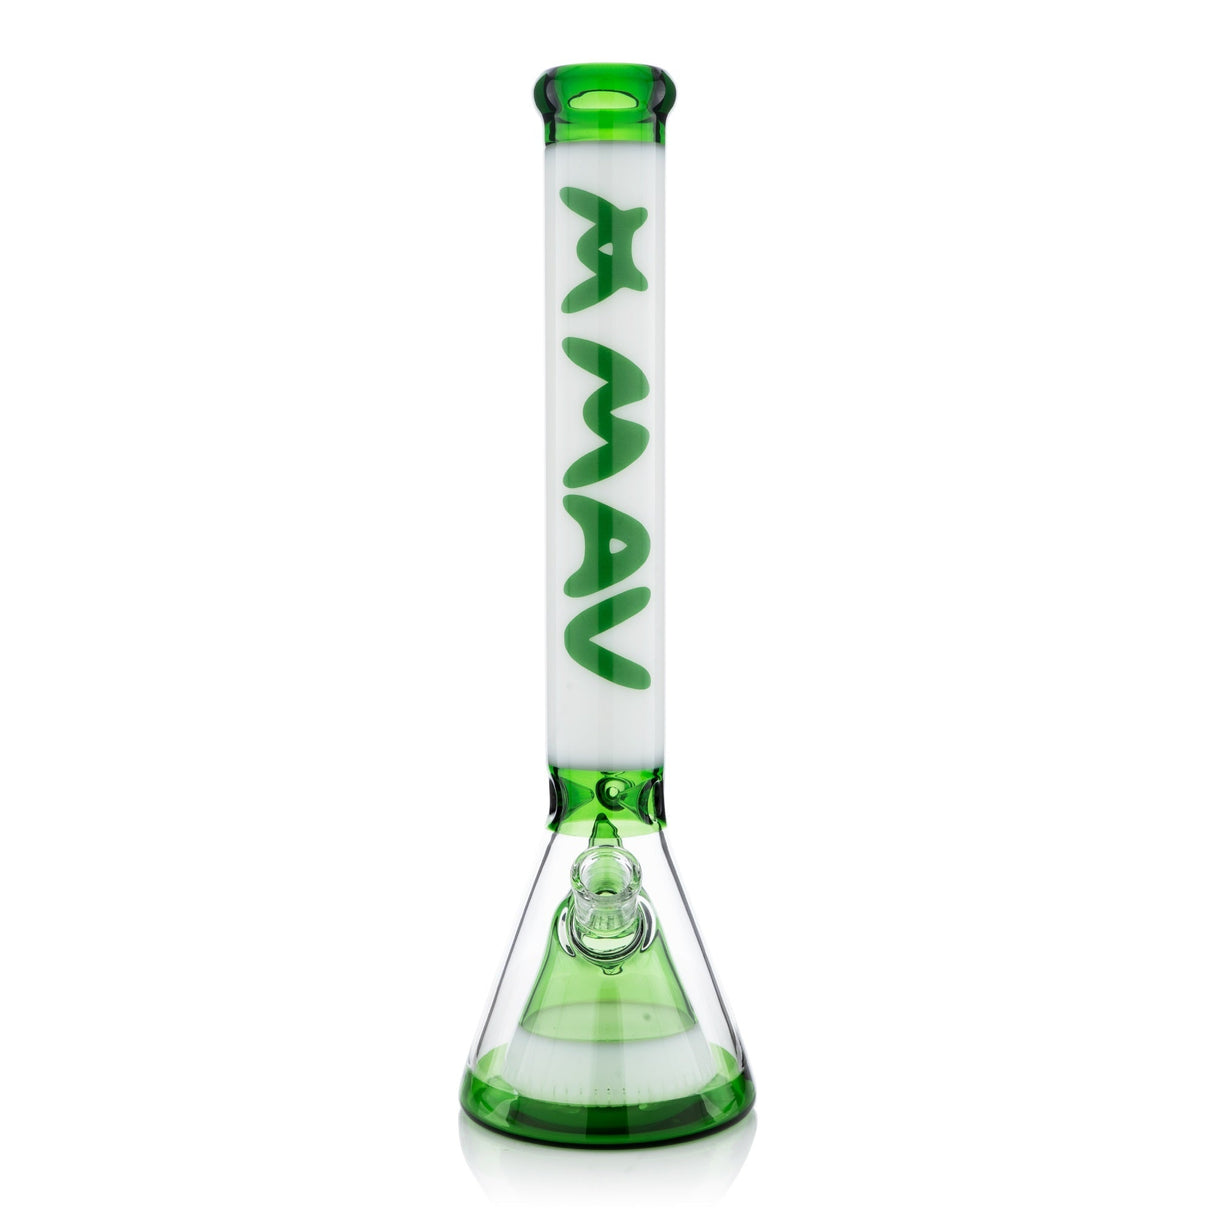 MAV Glass 18" Manhattan Pyramid Beaker in Green - Front View on White Background